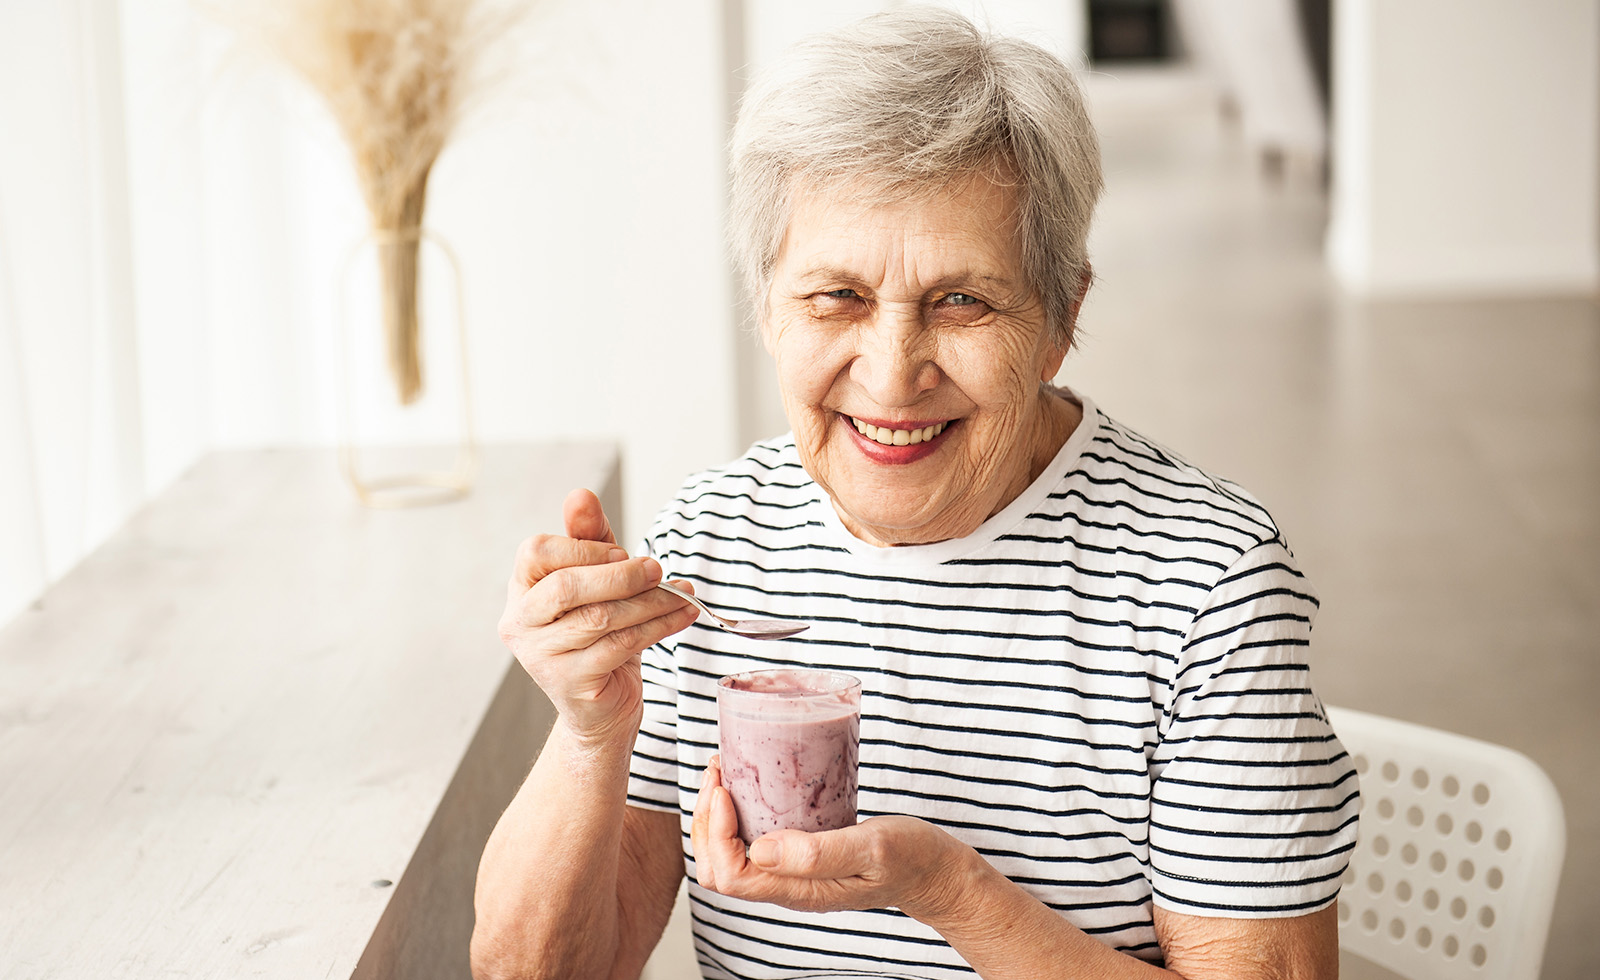 Gut Health for Older Adults